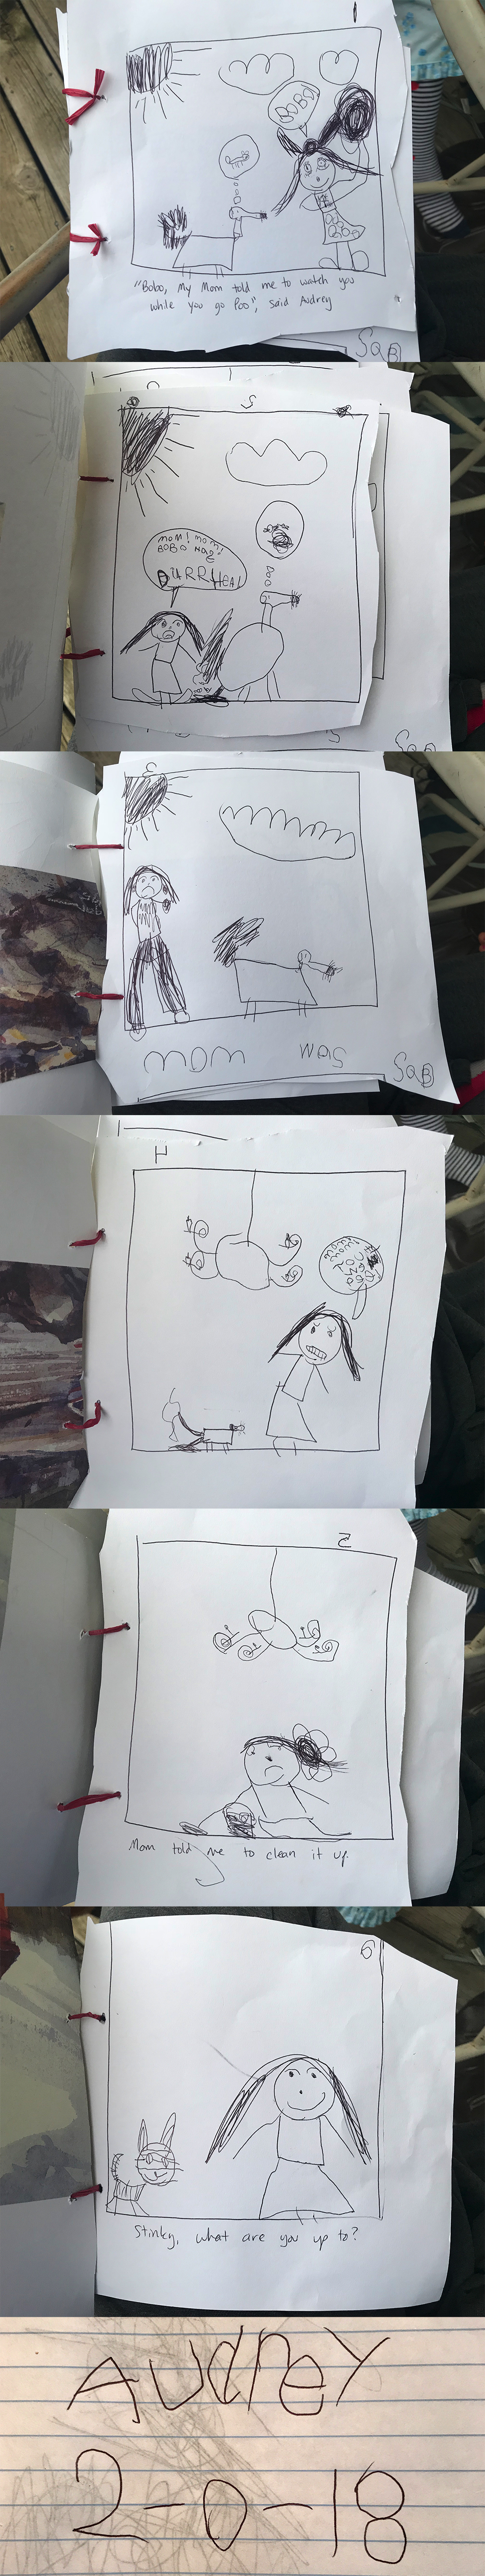 My niece Audrey drew this comic.